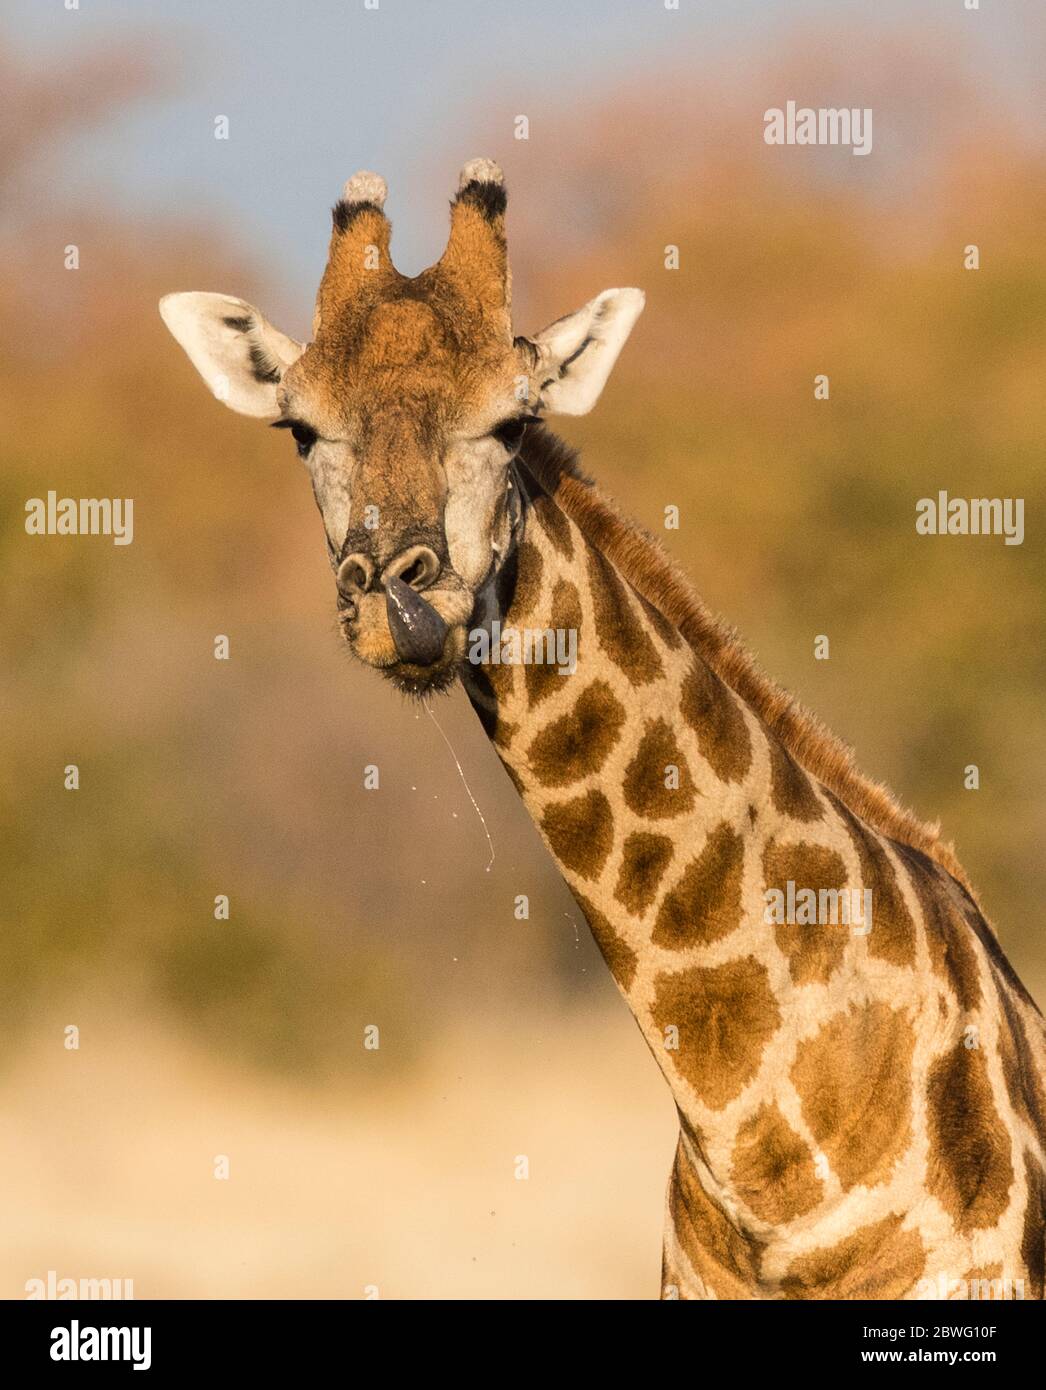 Headshot of southern giraffe (Giraffa giraffa), Etosha National Park, Namibia, Africa Stock Photo